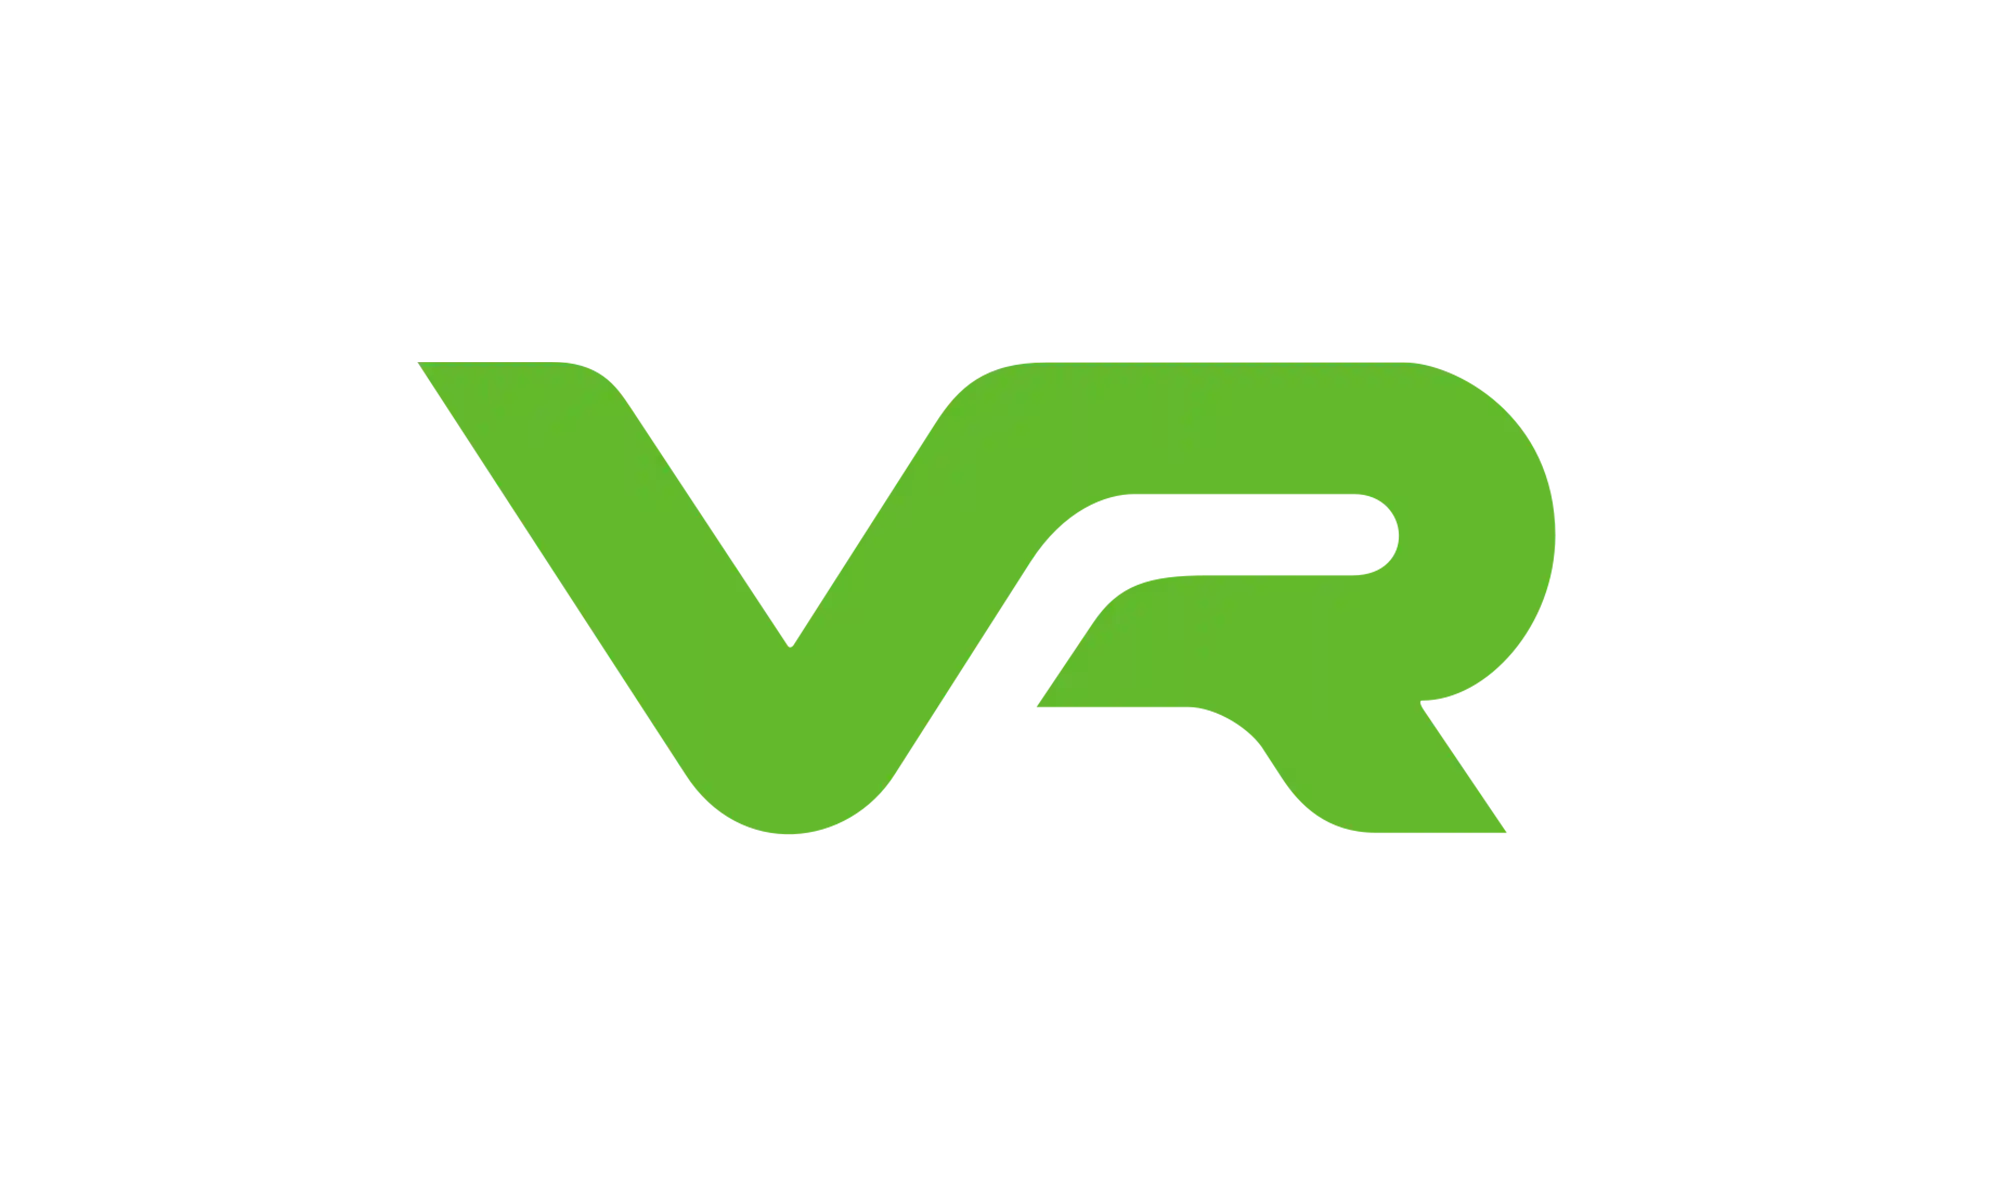 Logo_VR